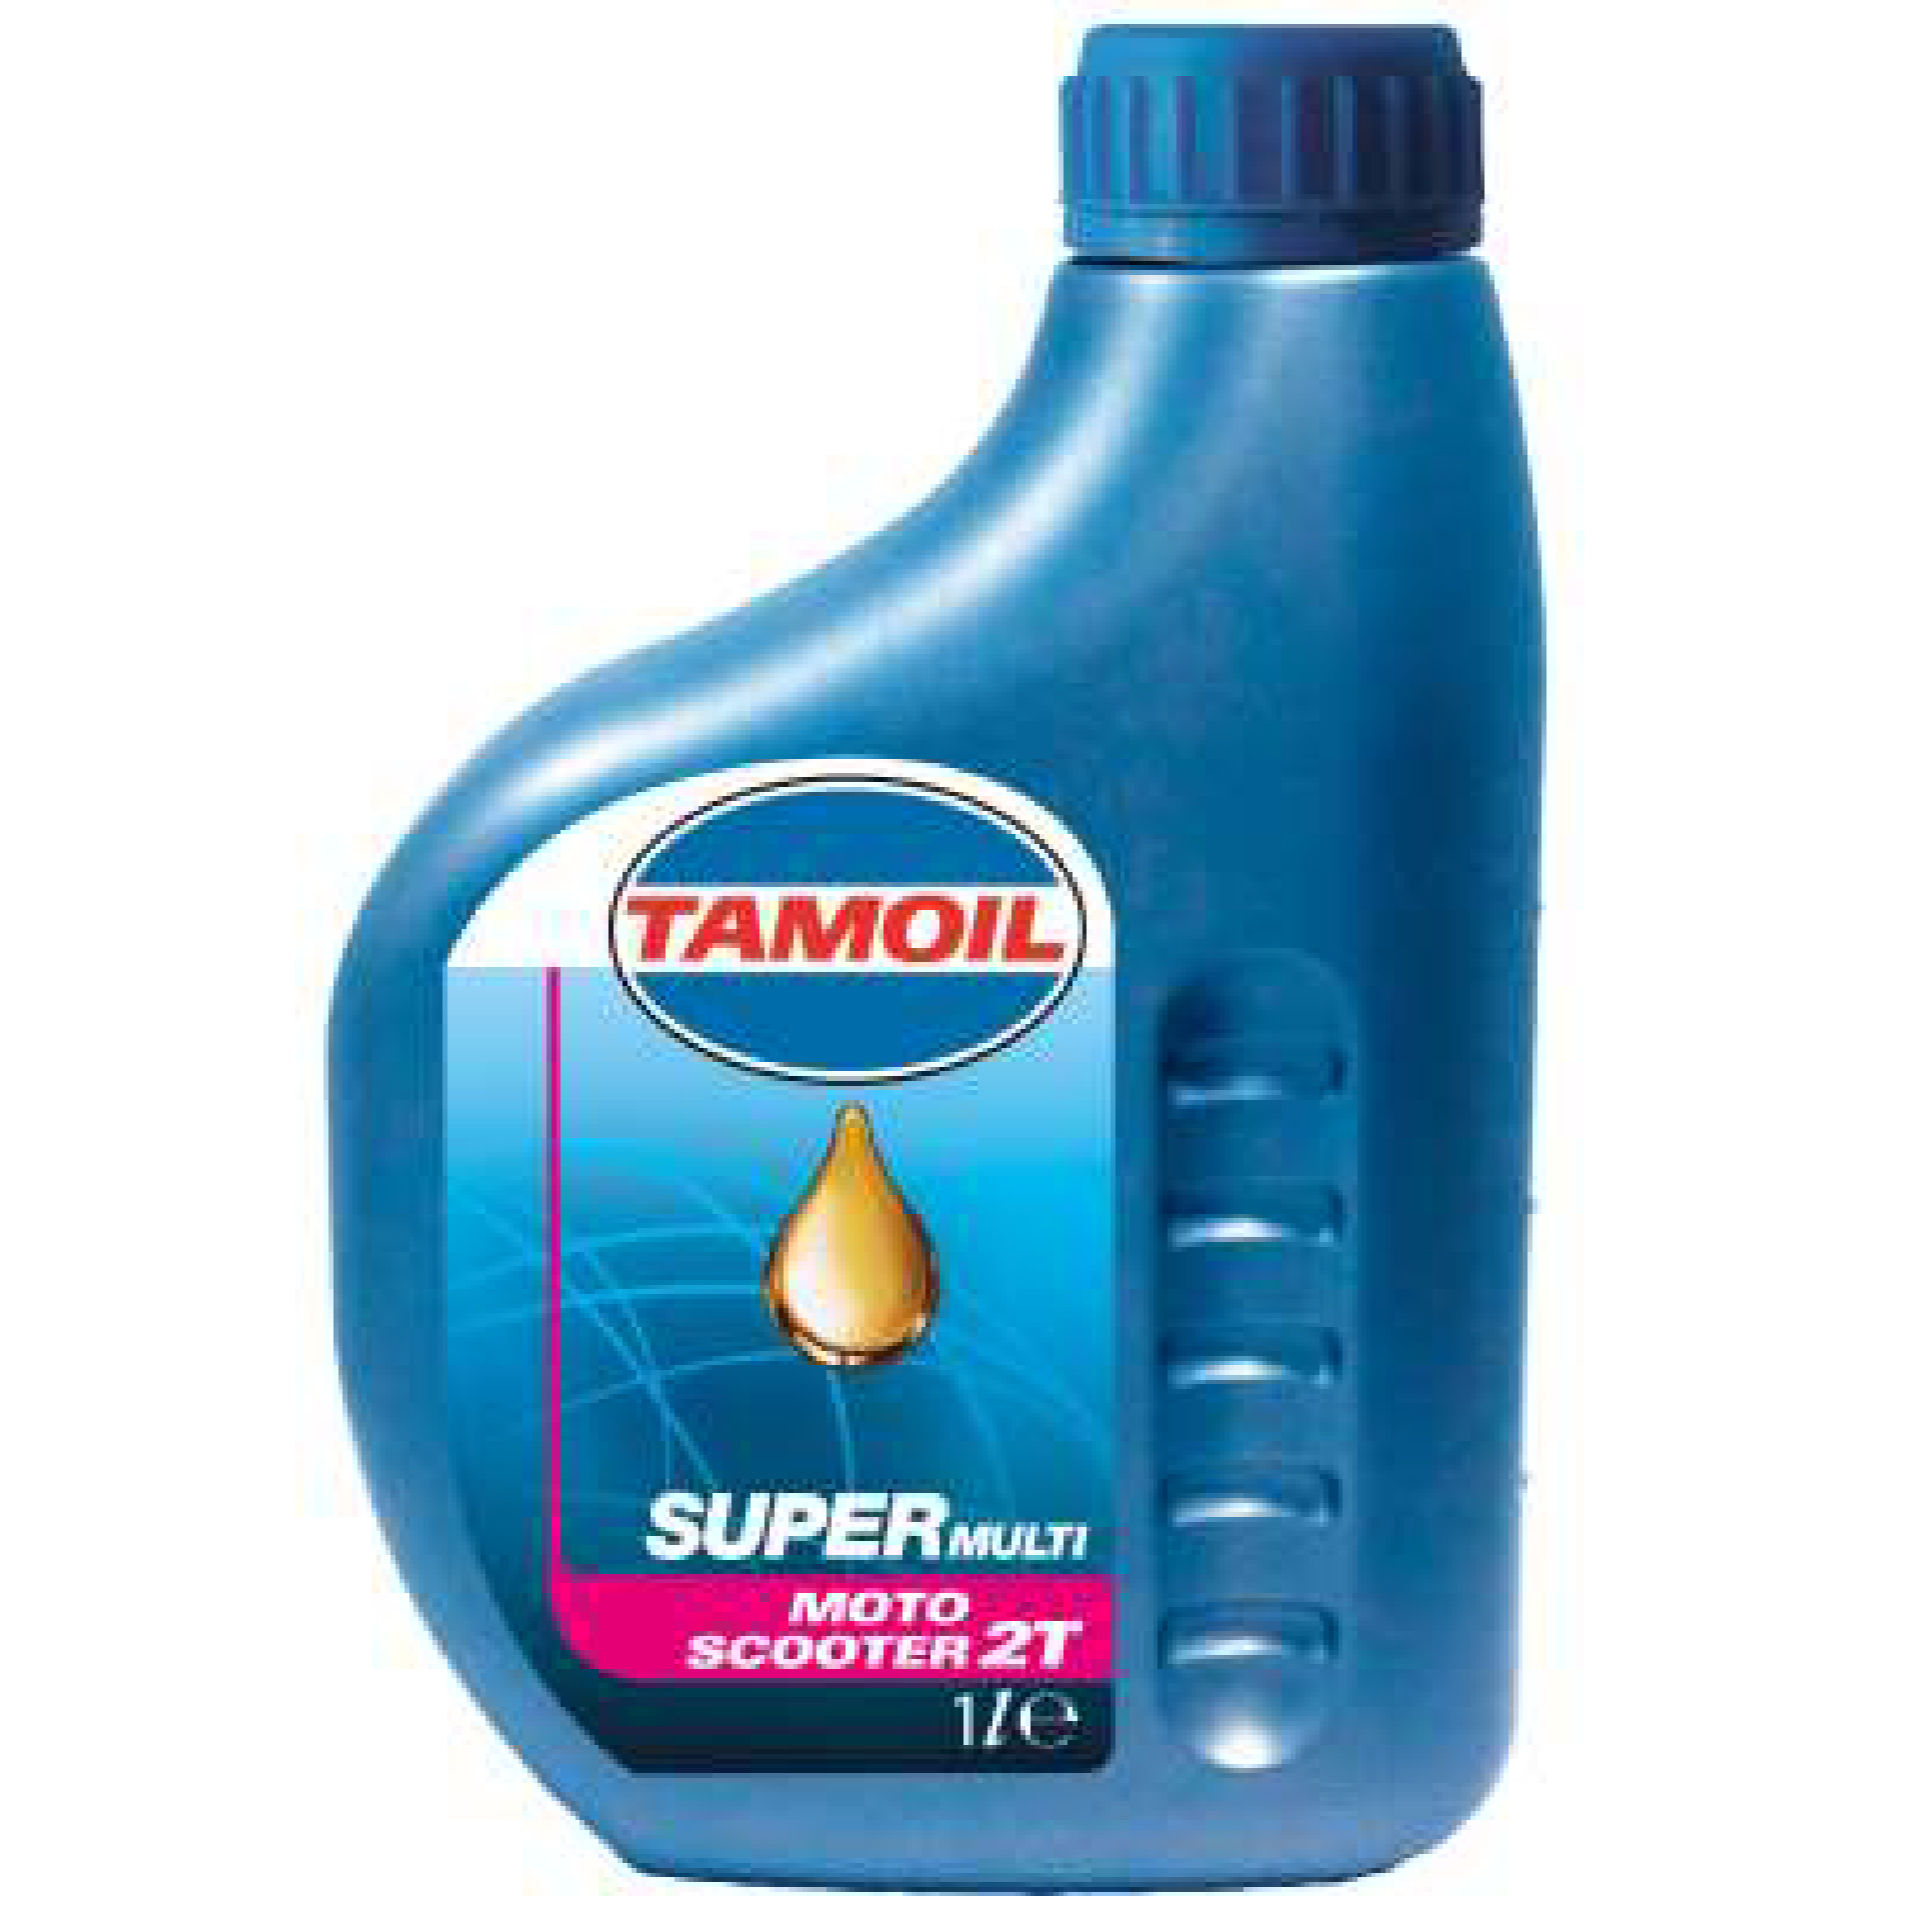 TAMOIL SUPERMULTI 2T LT.1Tamoil